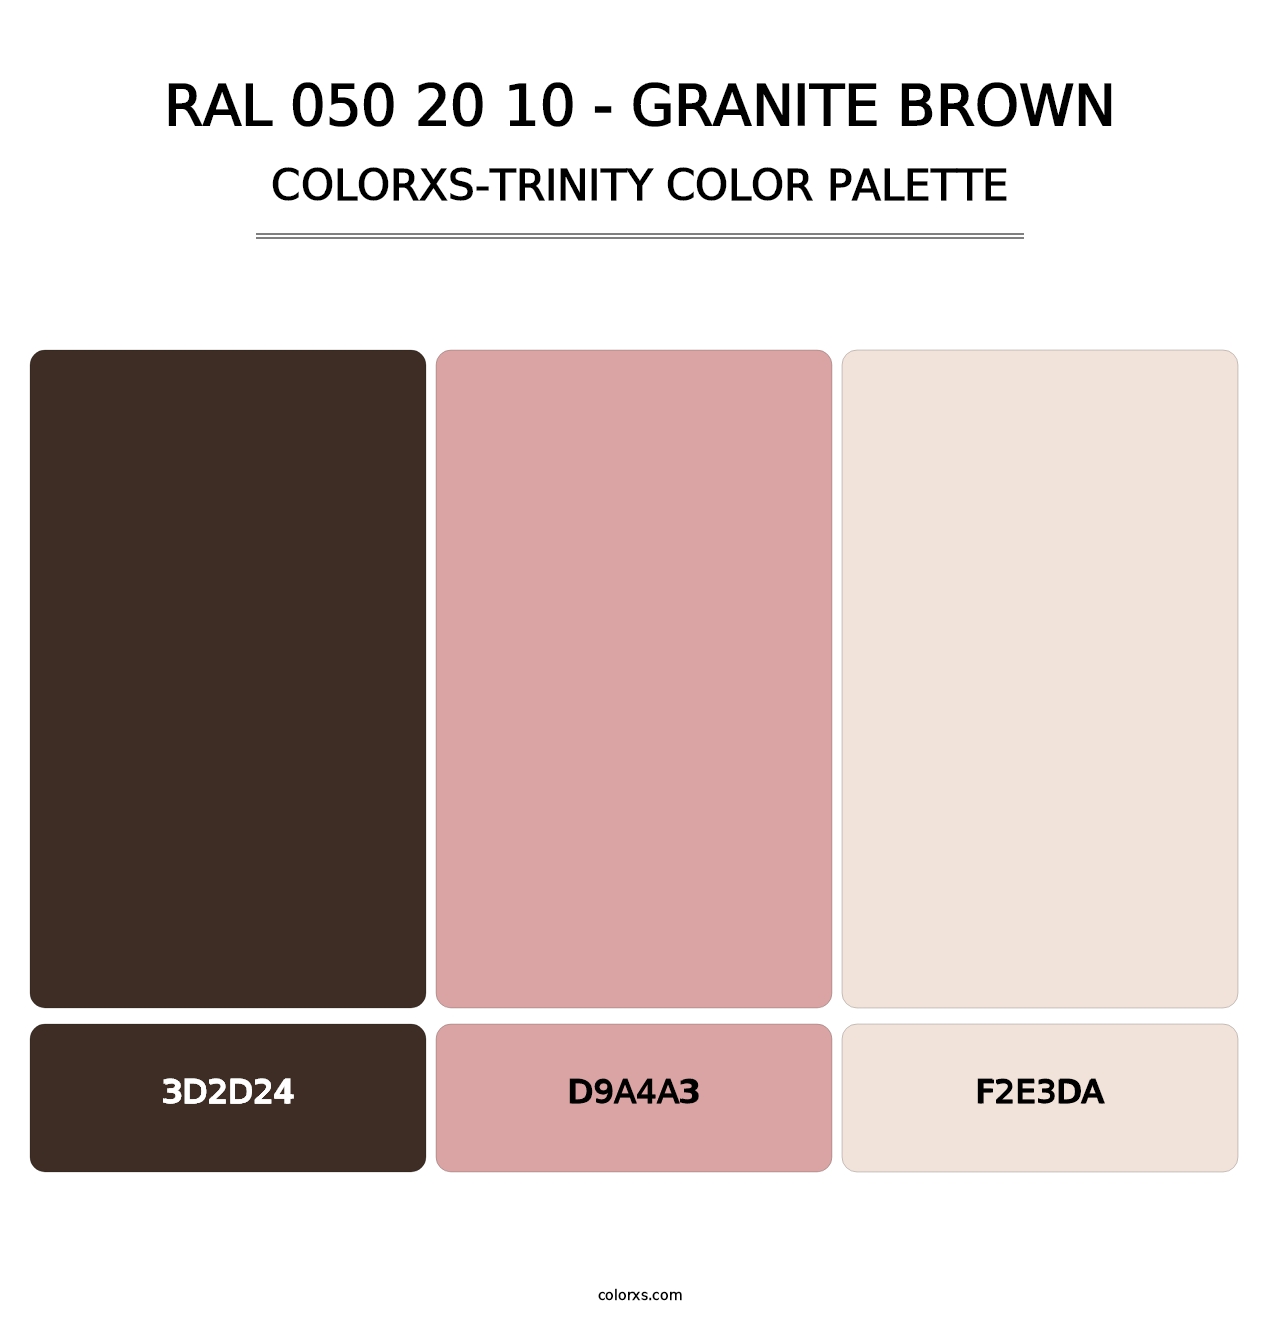 RAL 050 20 10 - Granite Brown - Colorxs Trinity Palette